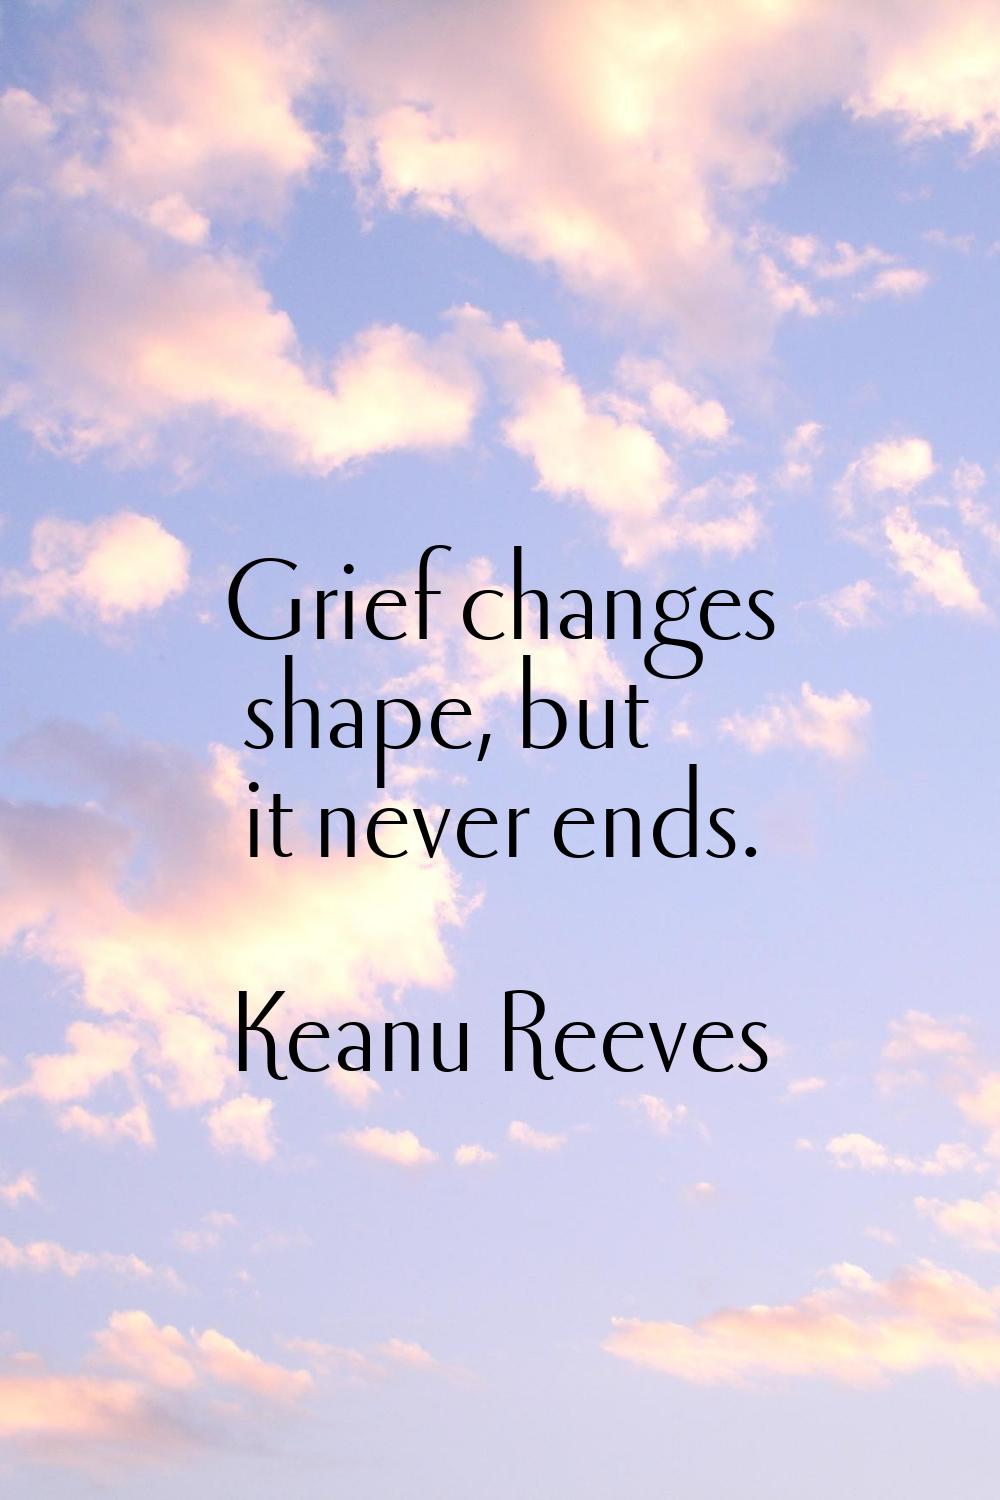 Grief changes shape, but it never ends.